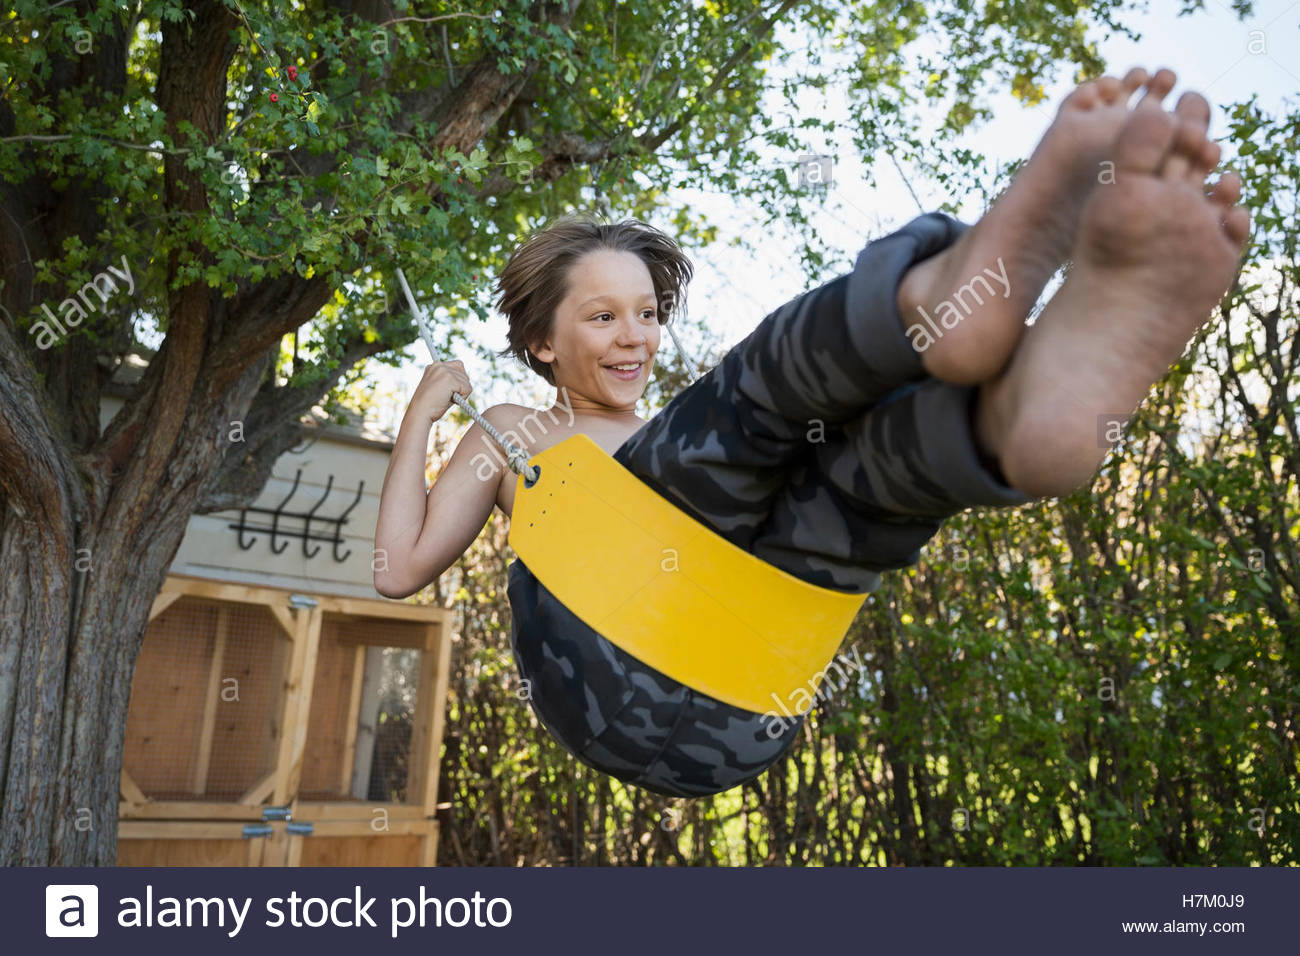 Playful boy swinging on tree swing in summer yard Stock Photo